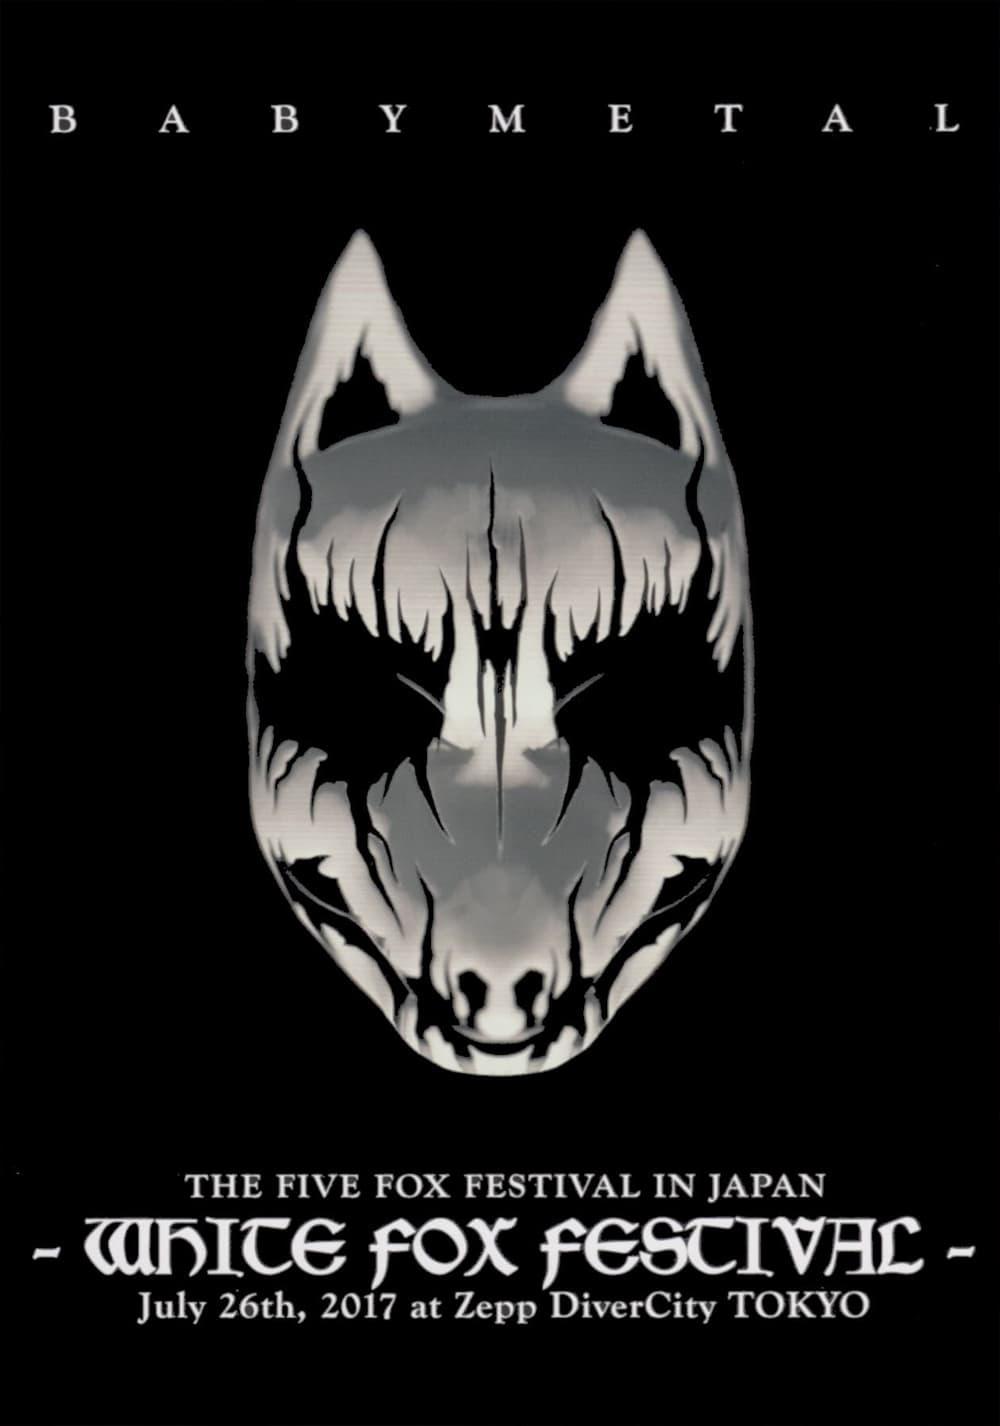 BABYMETAL - The Five Fox Festival in Japan - White Fox Festival poster